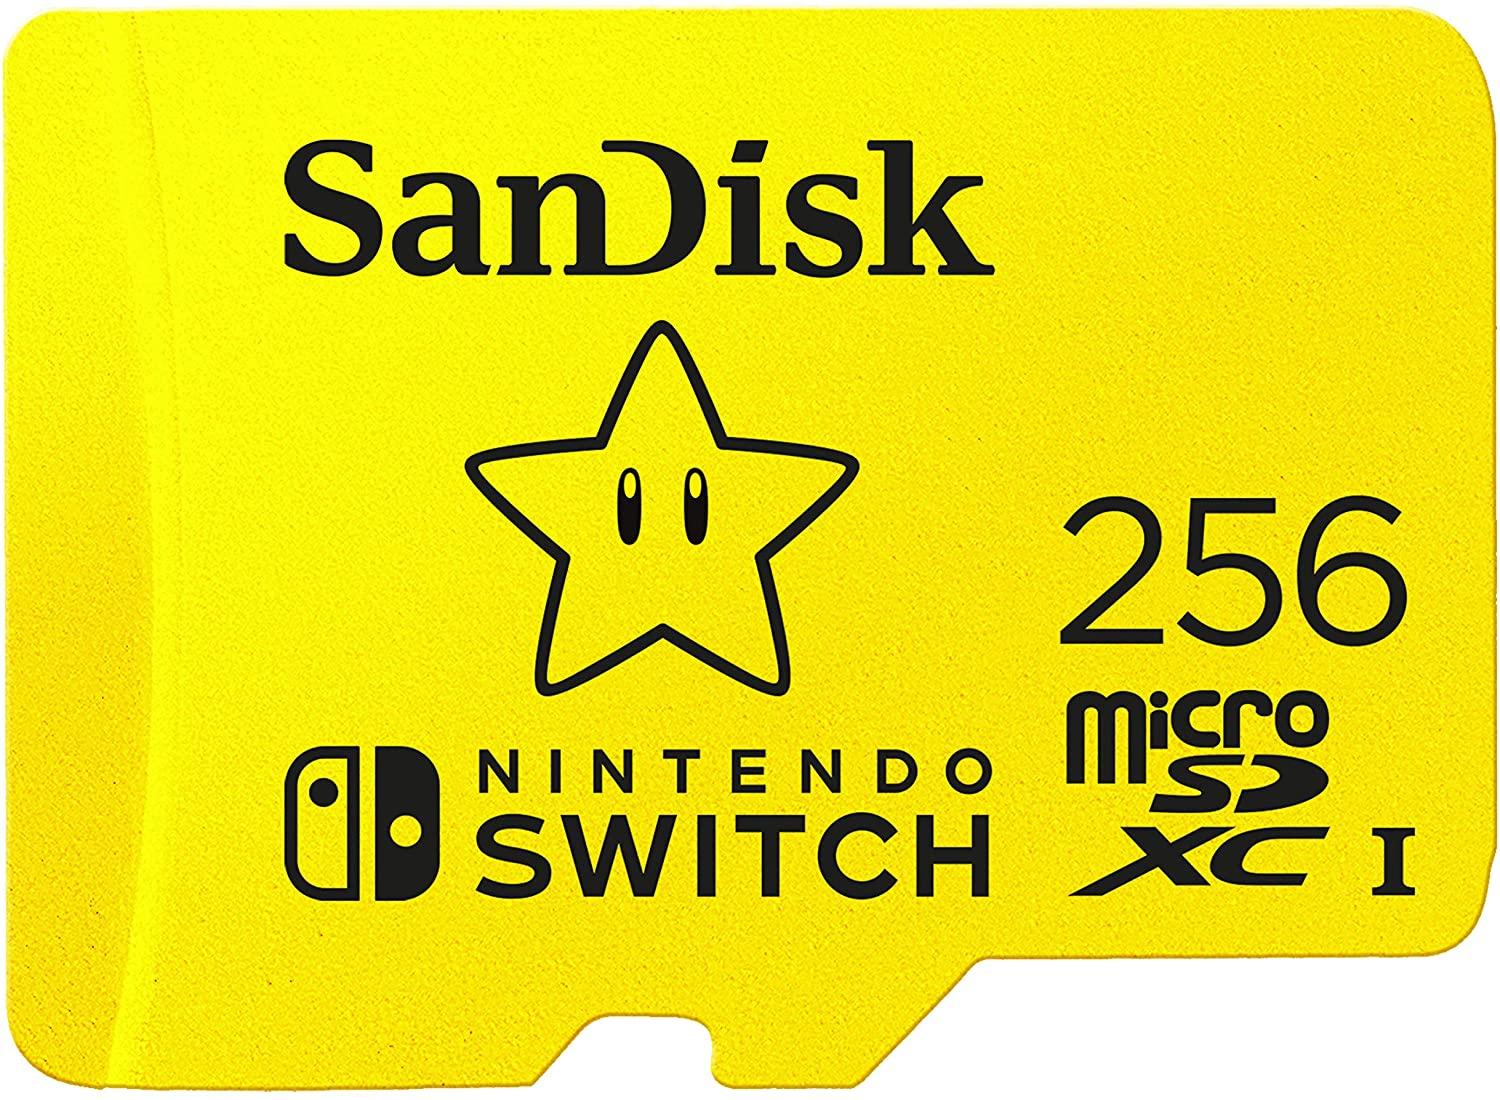 SanDisk 256GB Nintendo Switch microSDXC Memory Card for $39.99 Shipped